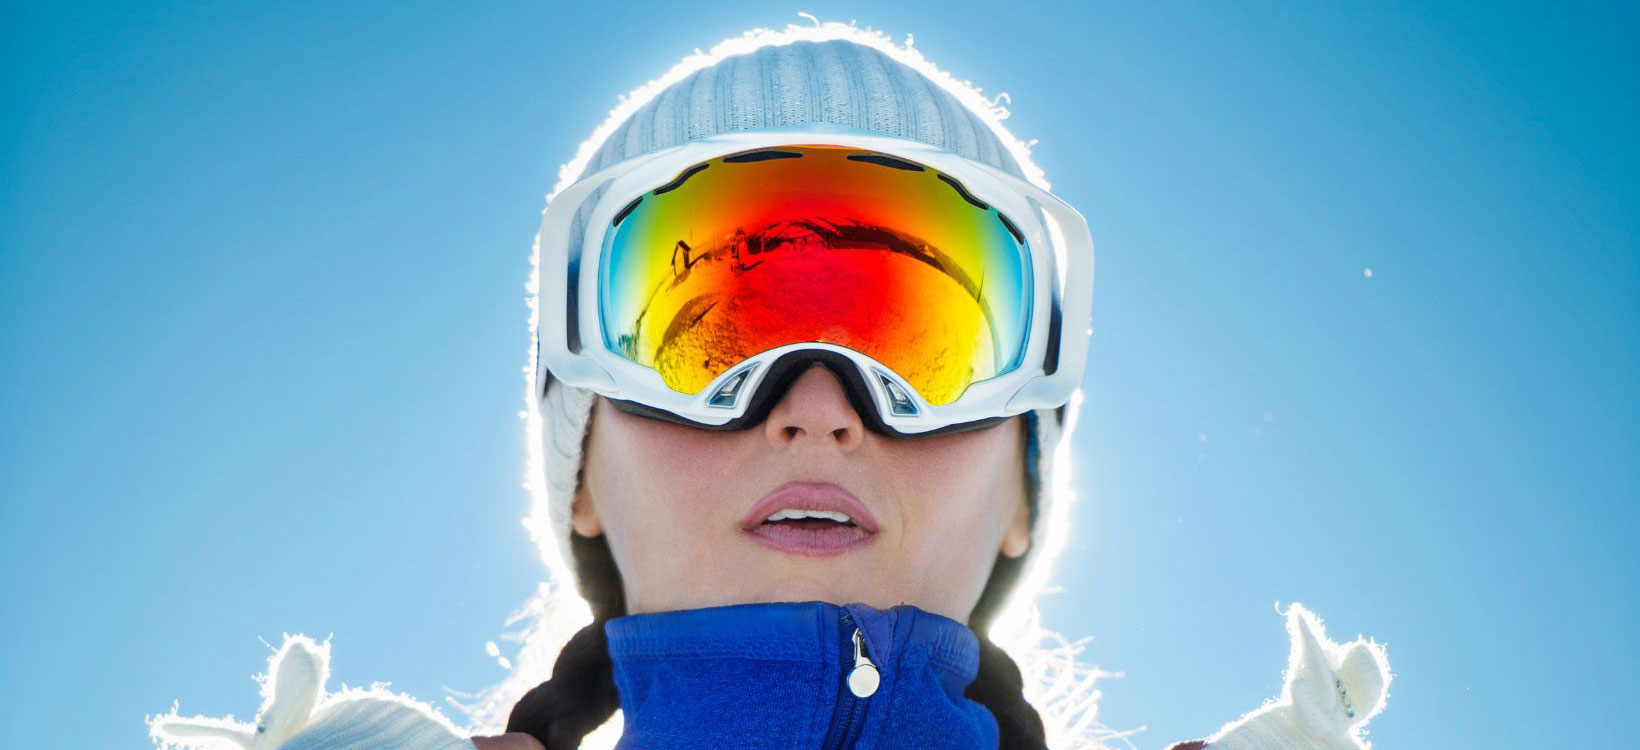 Gants Ski occasion et neuf - Jusqu'à -70%